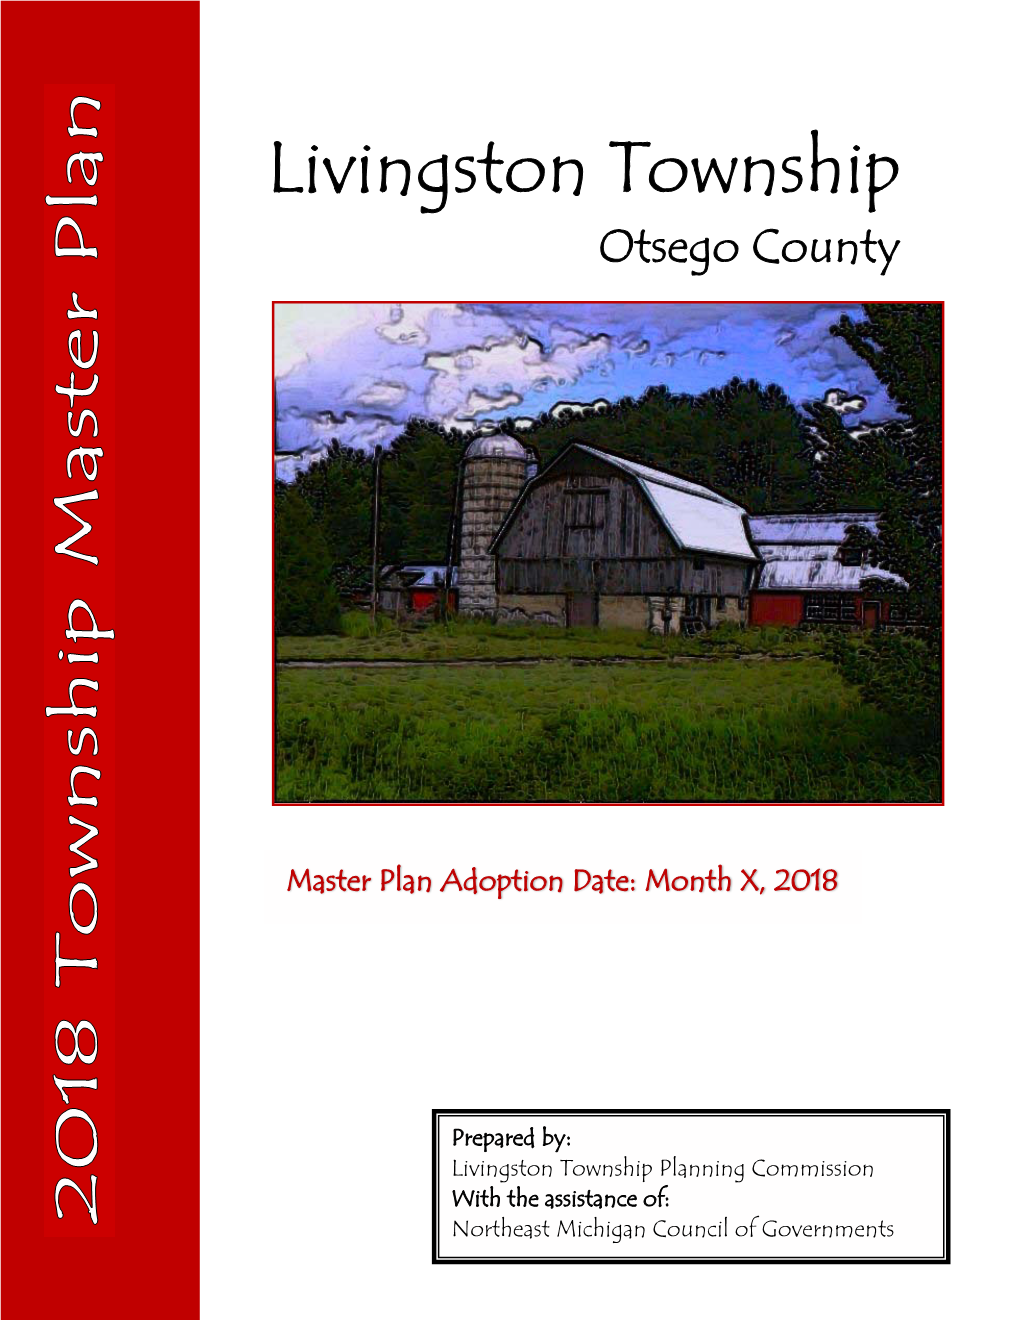 Livingston Township Master Plan Update